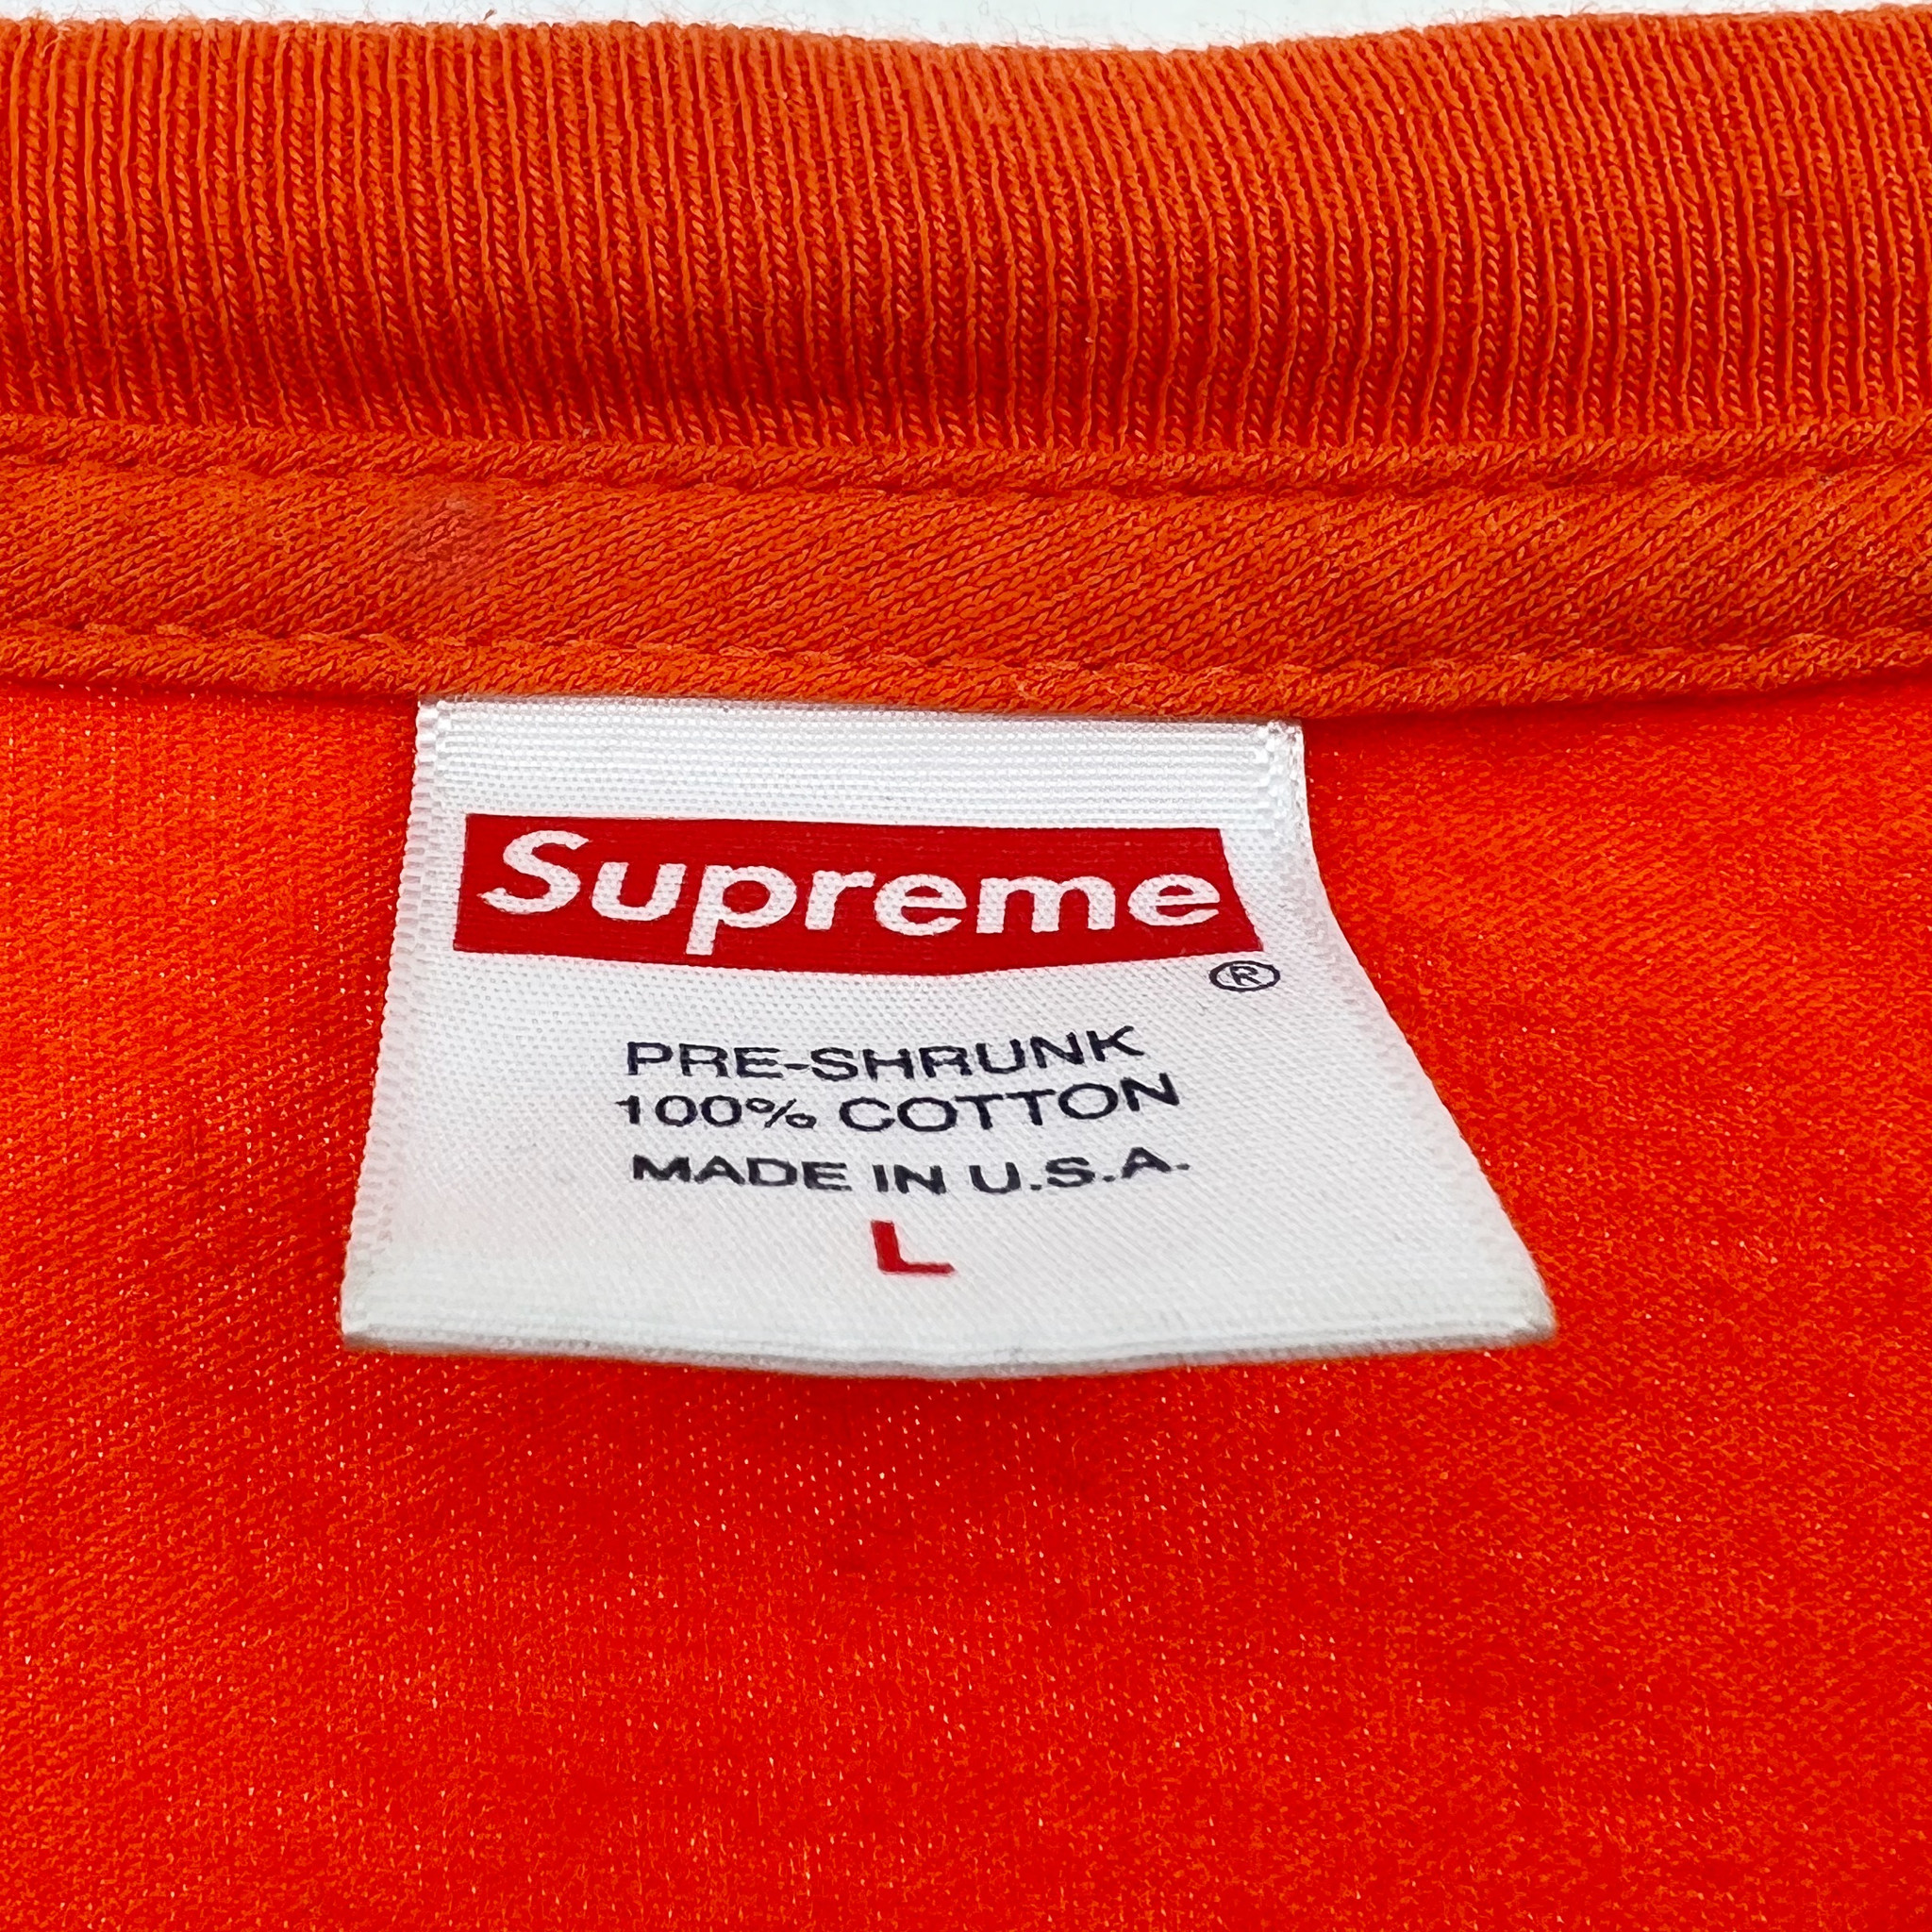 Supreme Orange Box Logo Long Sleeve T Shirt - Oliver's Archive